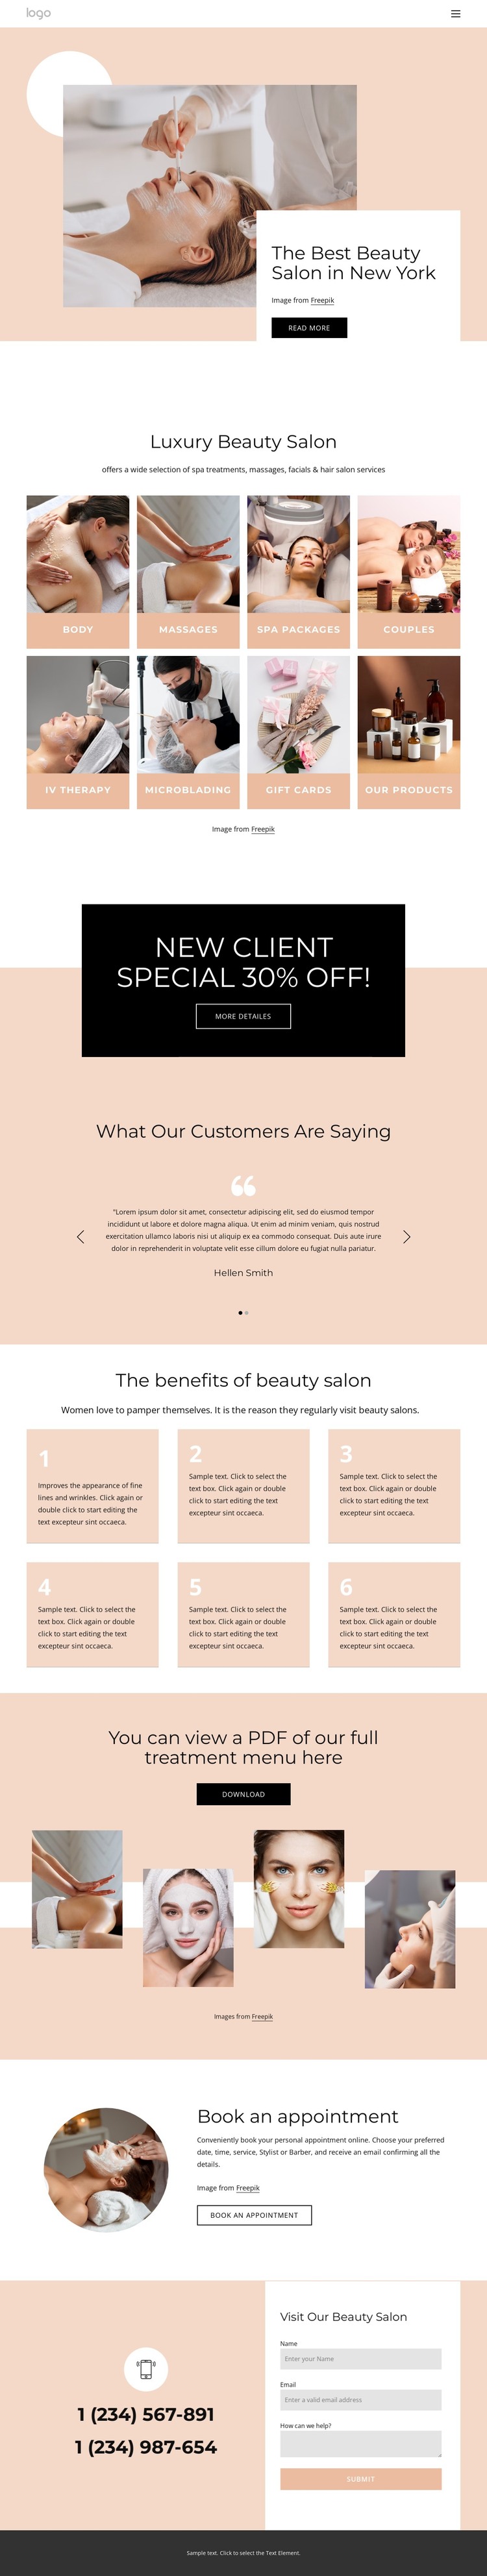 The best beauty salon in NYC Web Design